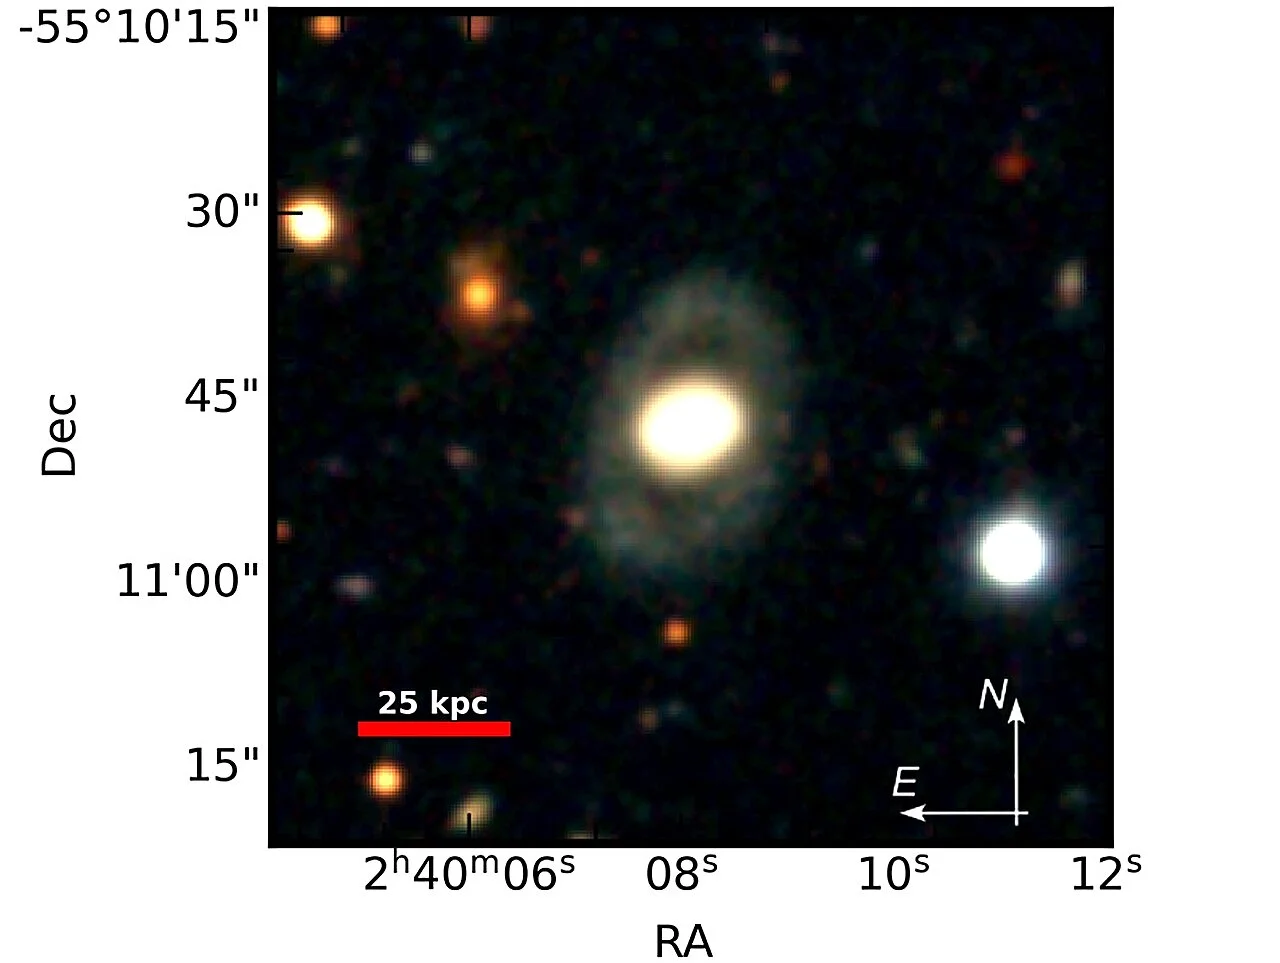 Galáxia anelar descoberta por astrônomos indianos